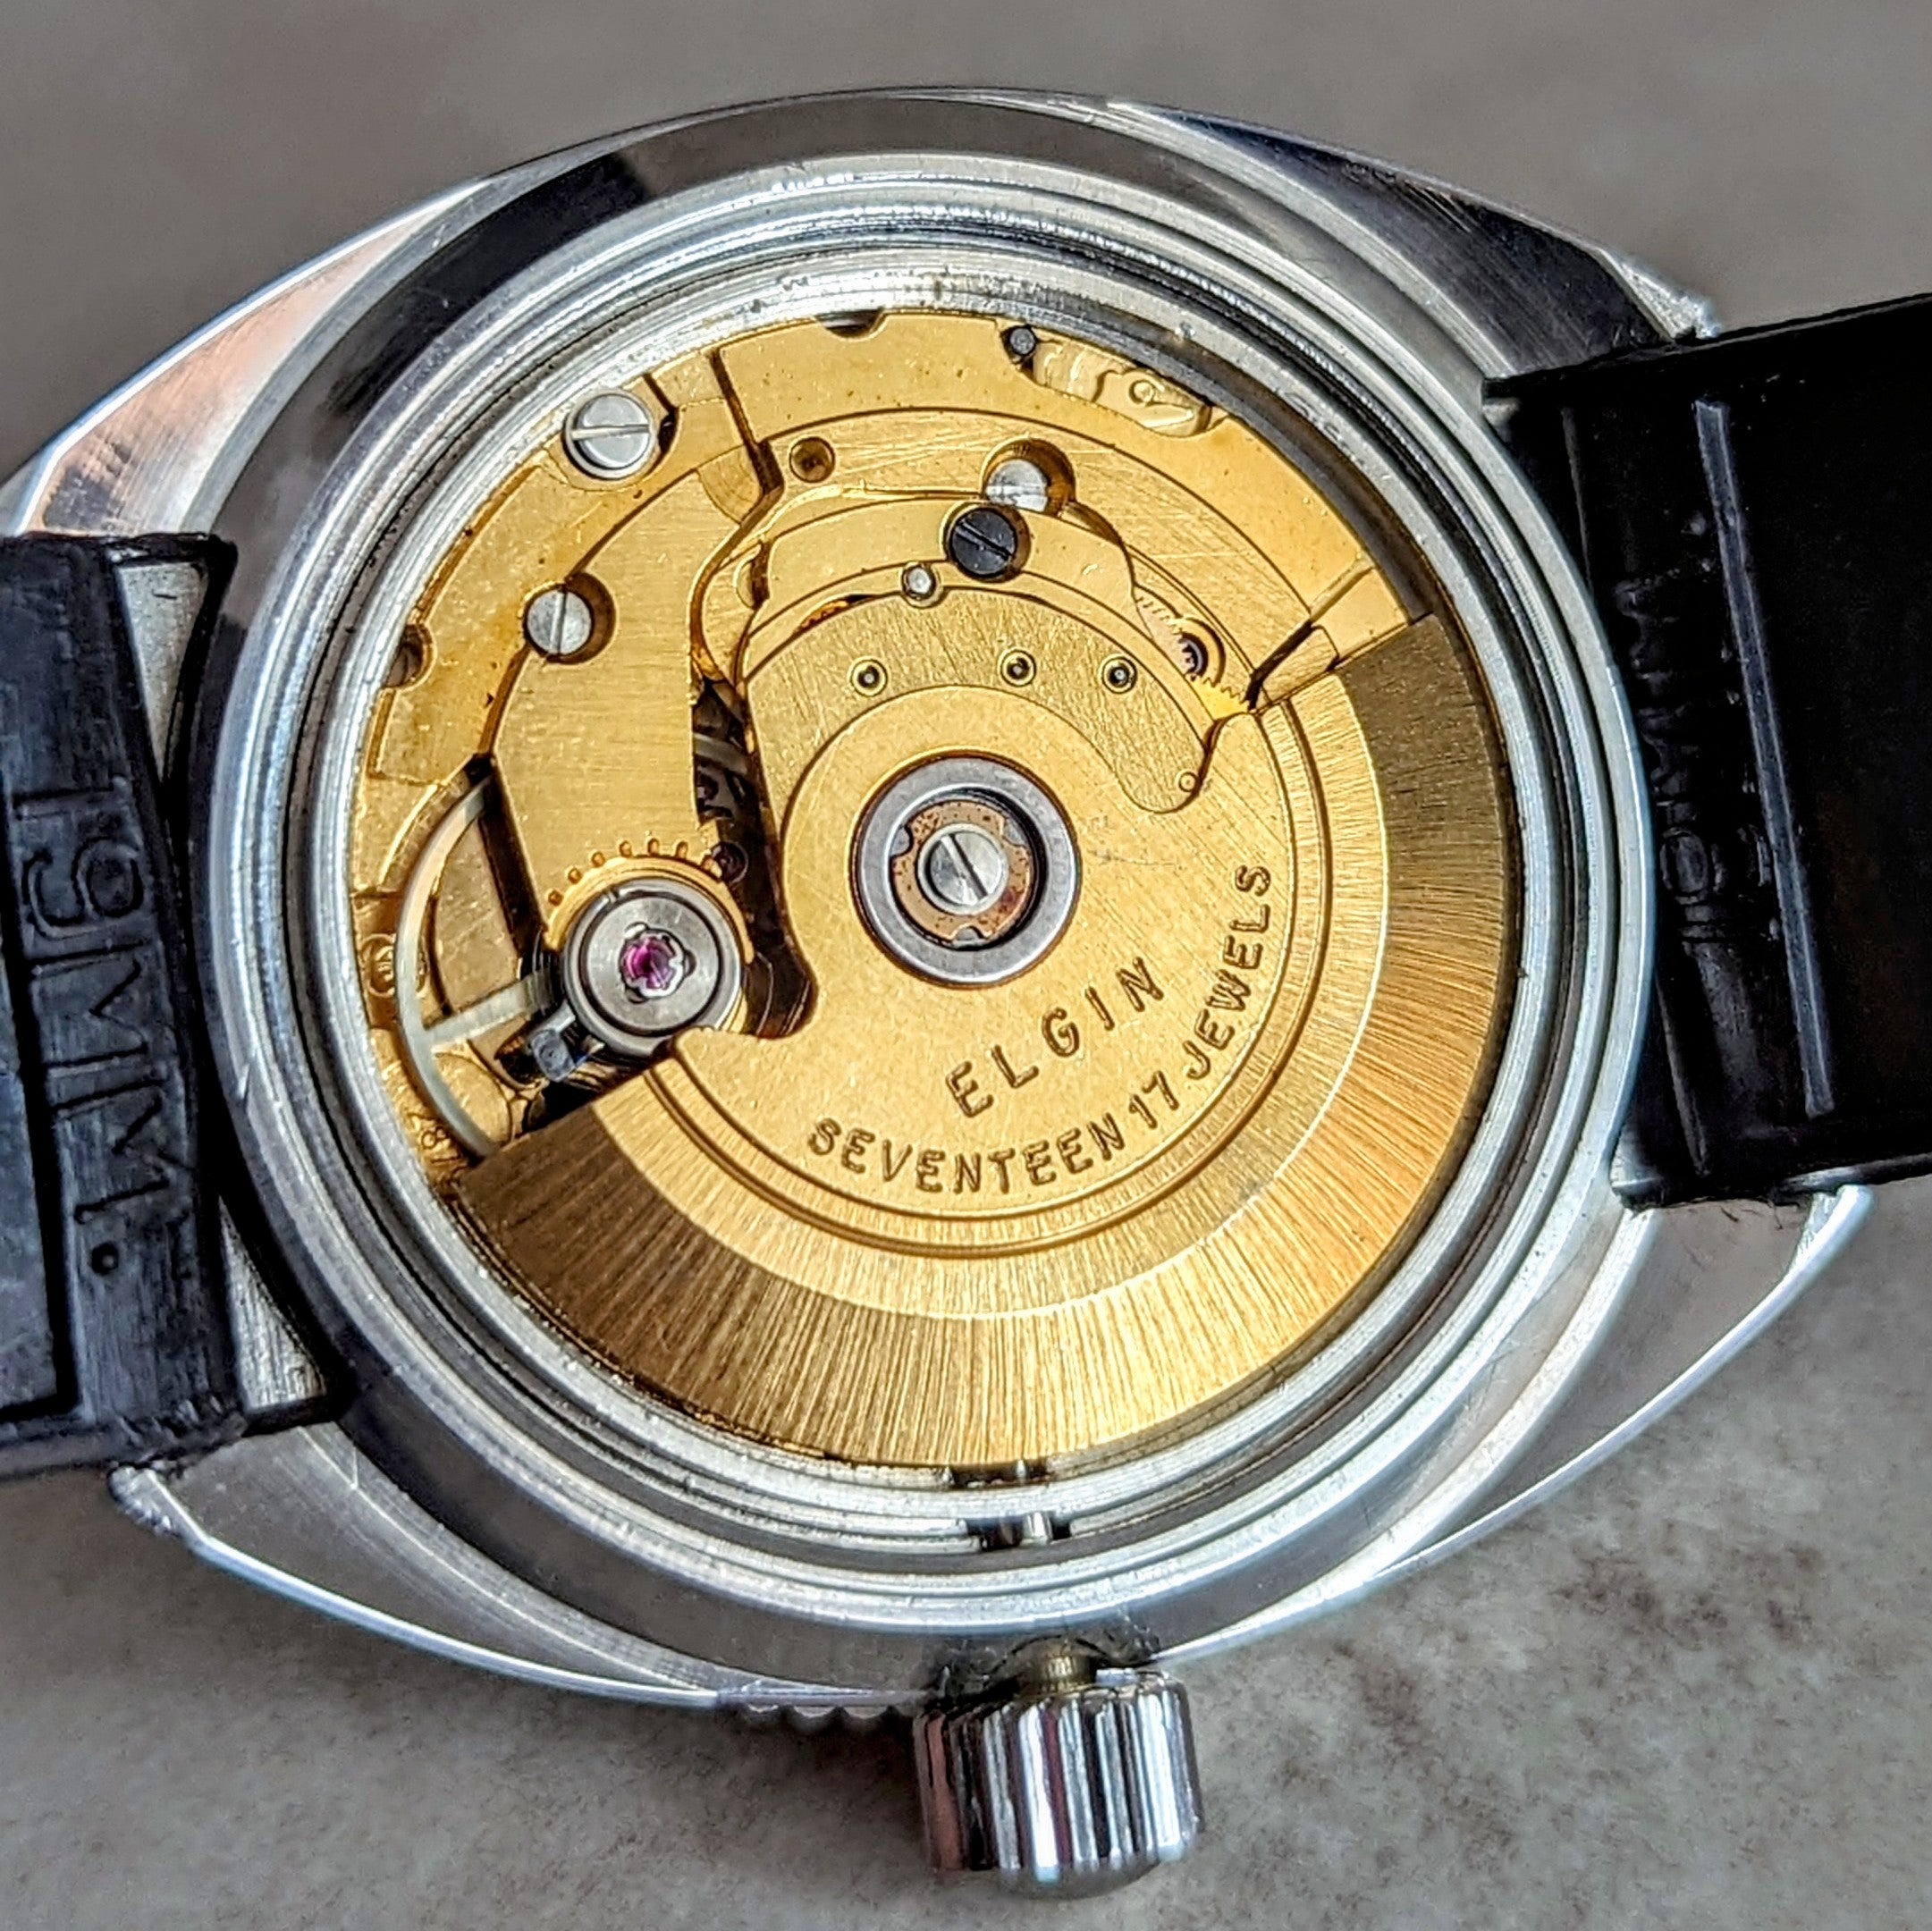 1960s ELGIN Diver Automatic Wristwatch Day/Date Ref. DH6312 Cal. ETA 2879 Watch